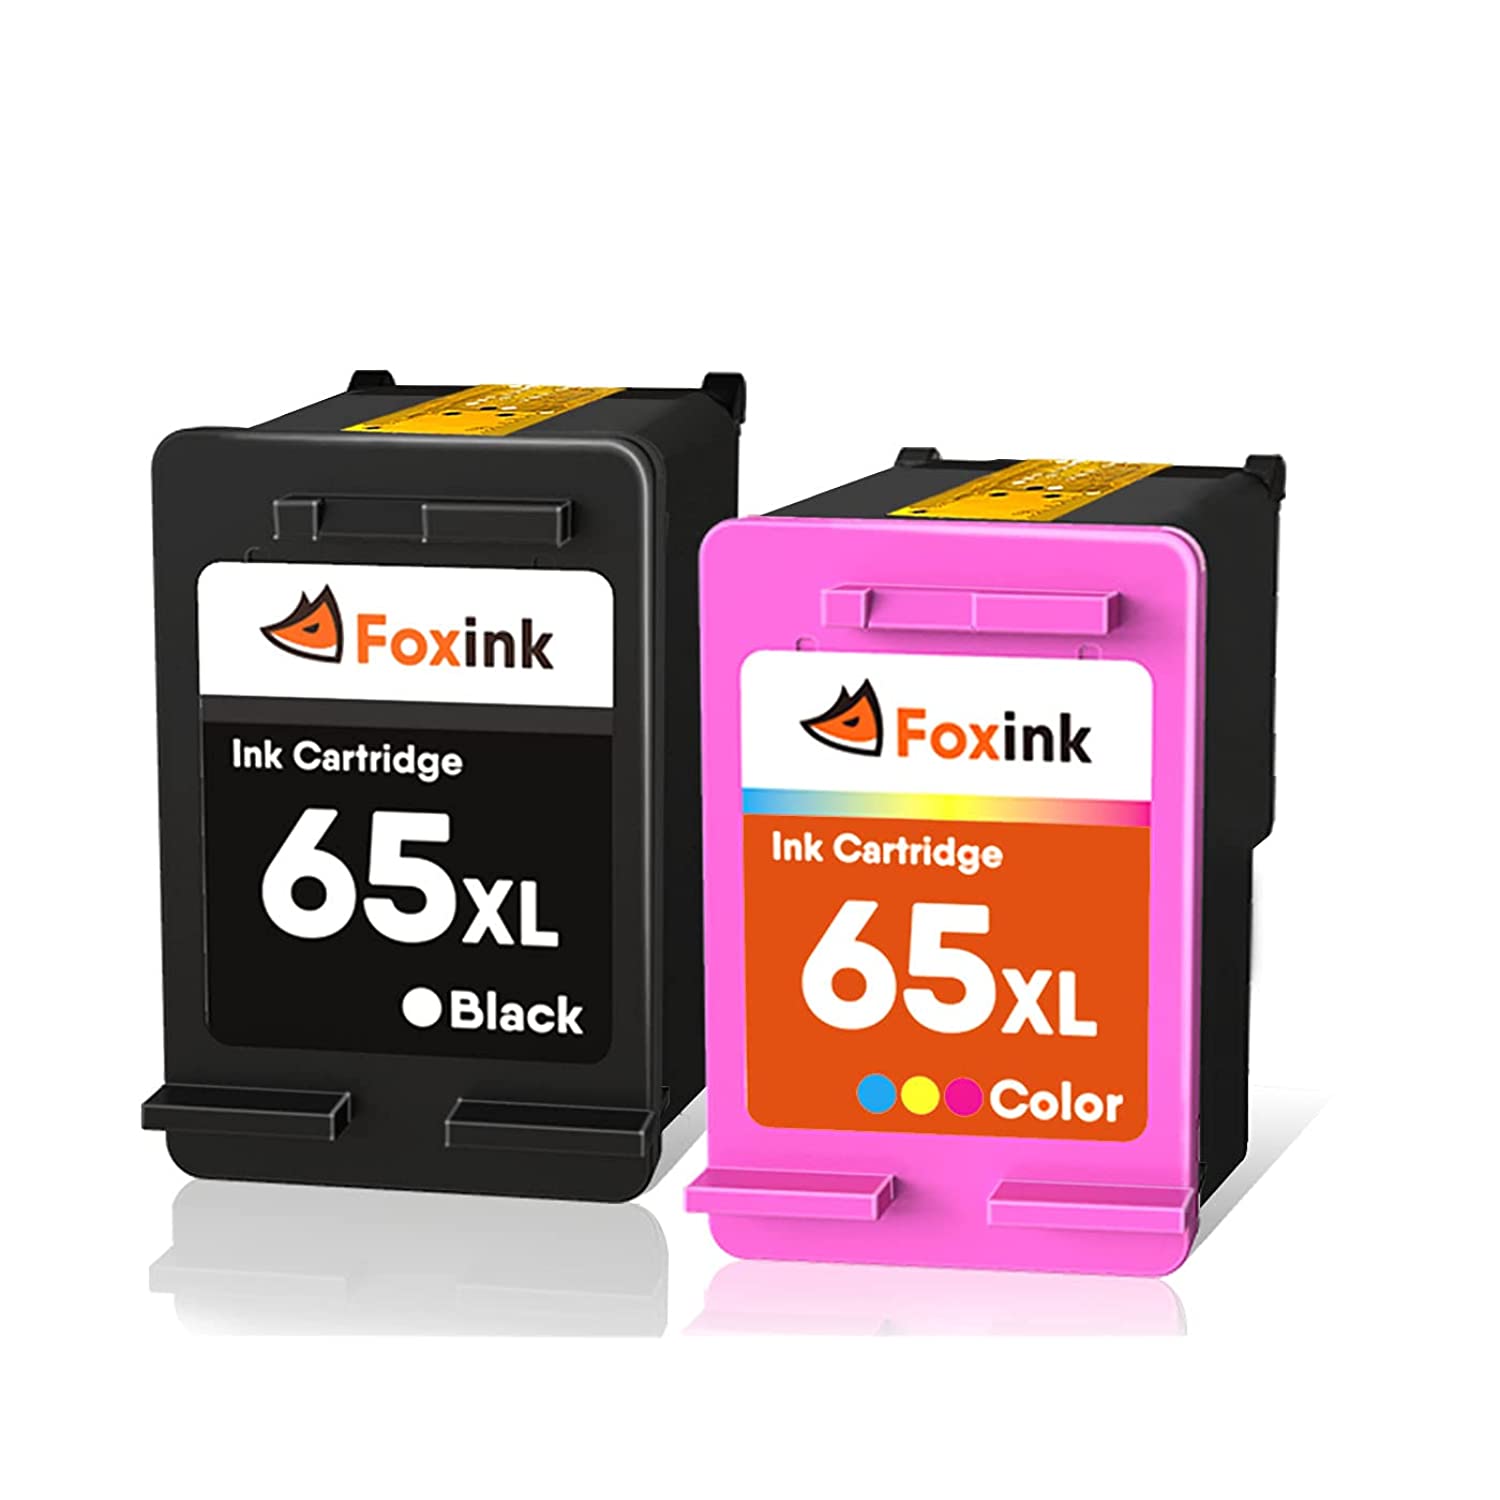 Ink Cartridge Replacement For Hp 65Xl 65 Ink Cartridges Black Color Combo Pack For Envy 5055 5052 5058 Deskjet 3755 2655 3720 3722 3723 3752 3758 2652 Printer (..